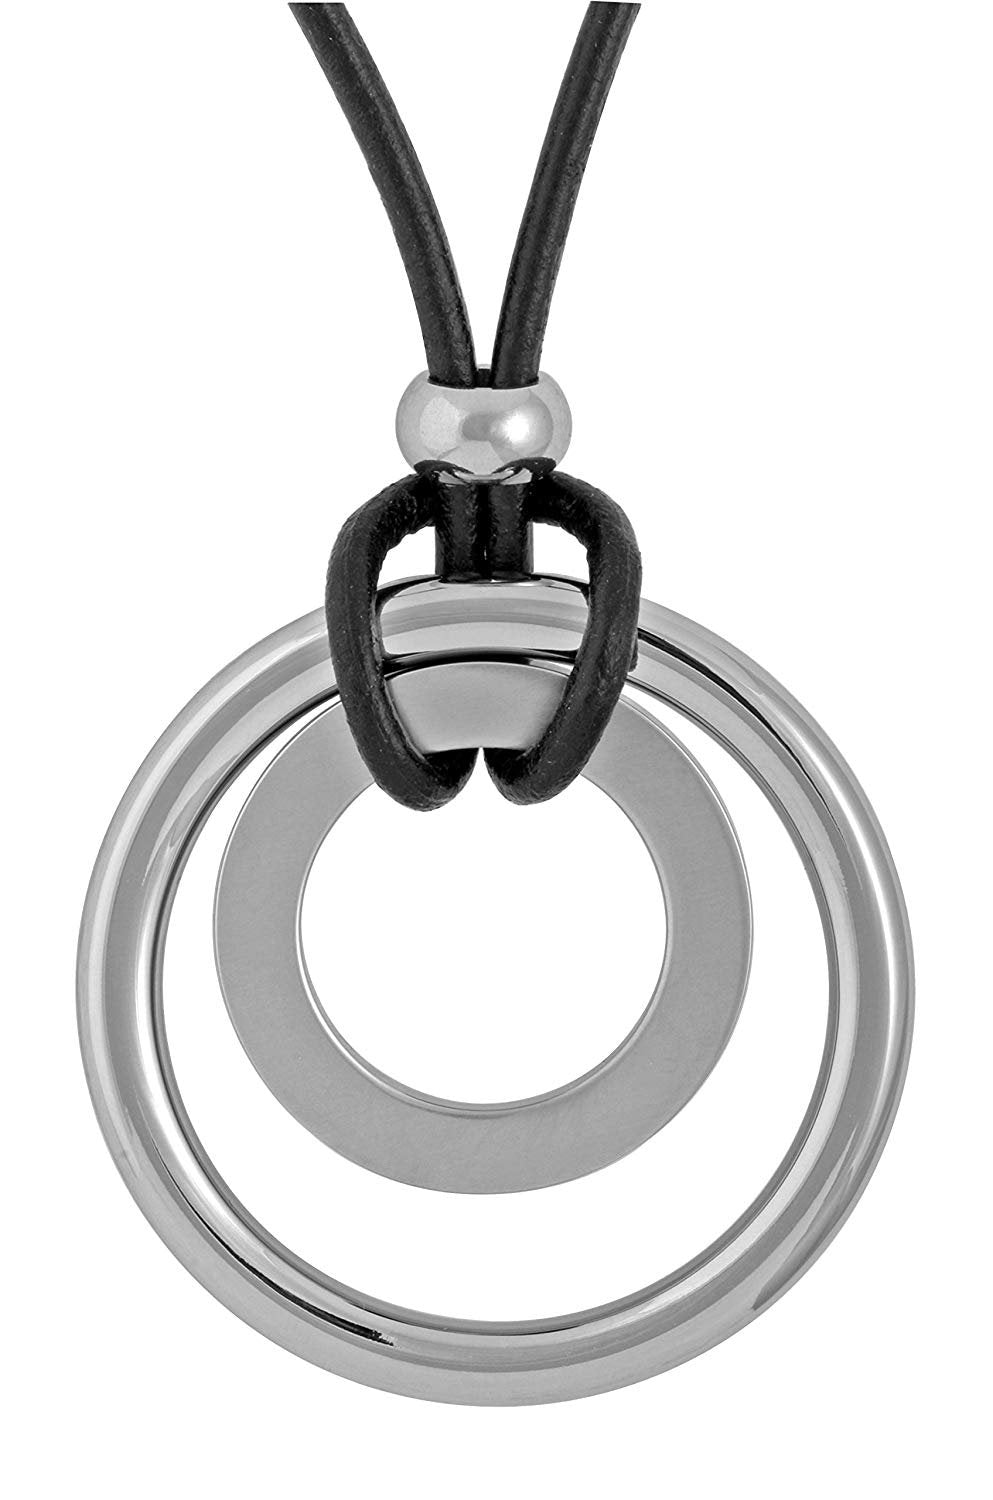 YTC Summit Orbites Pendant Orbit Collectible Accessory Necklace Jewelry Medallion